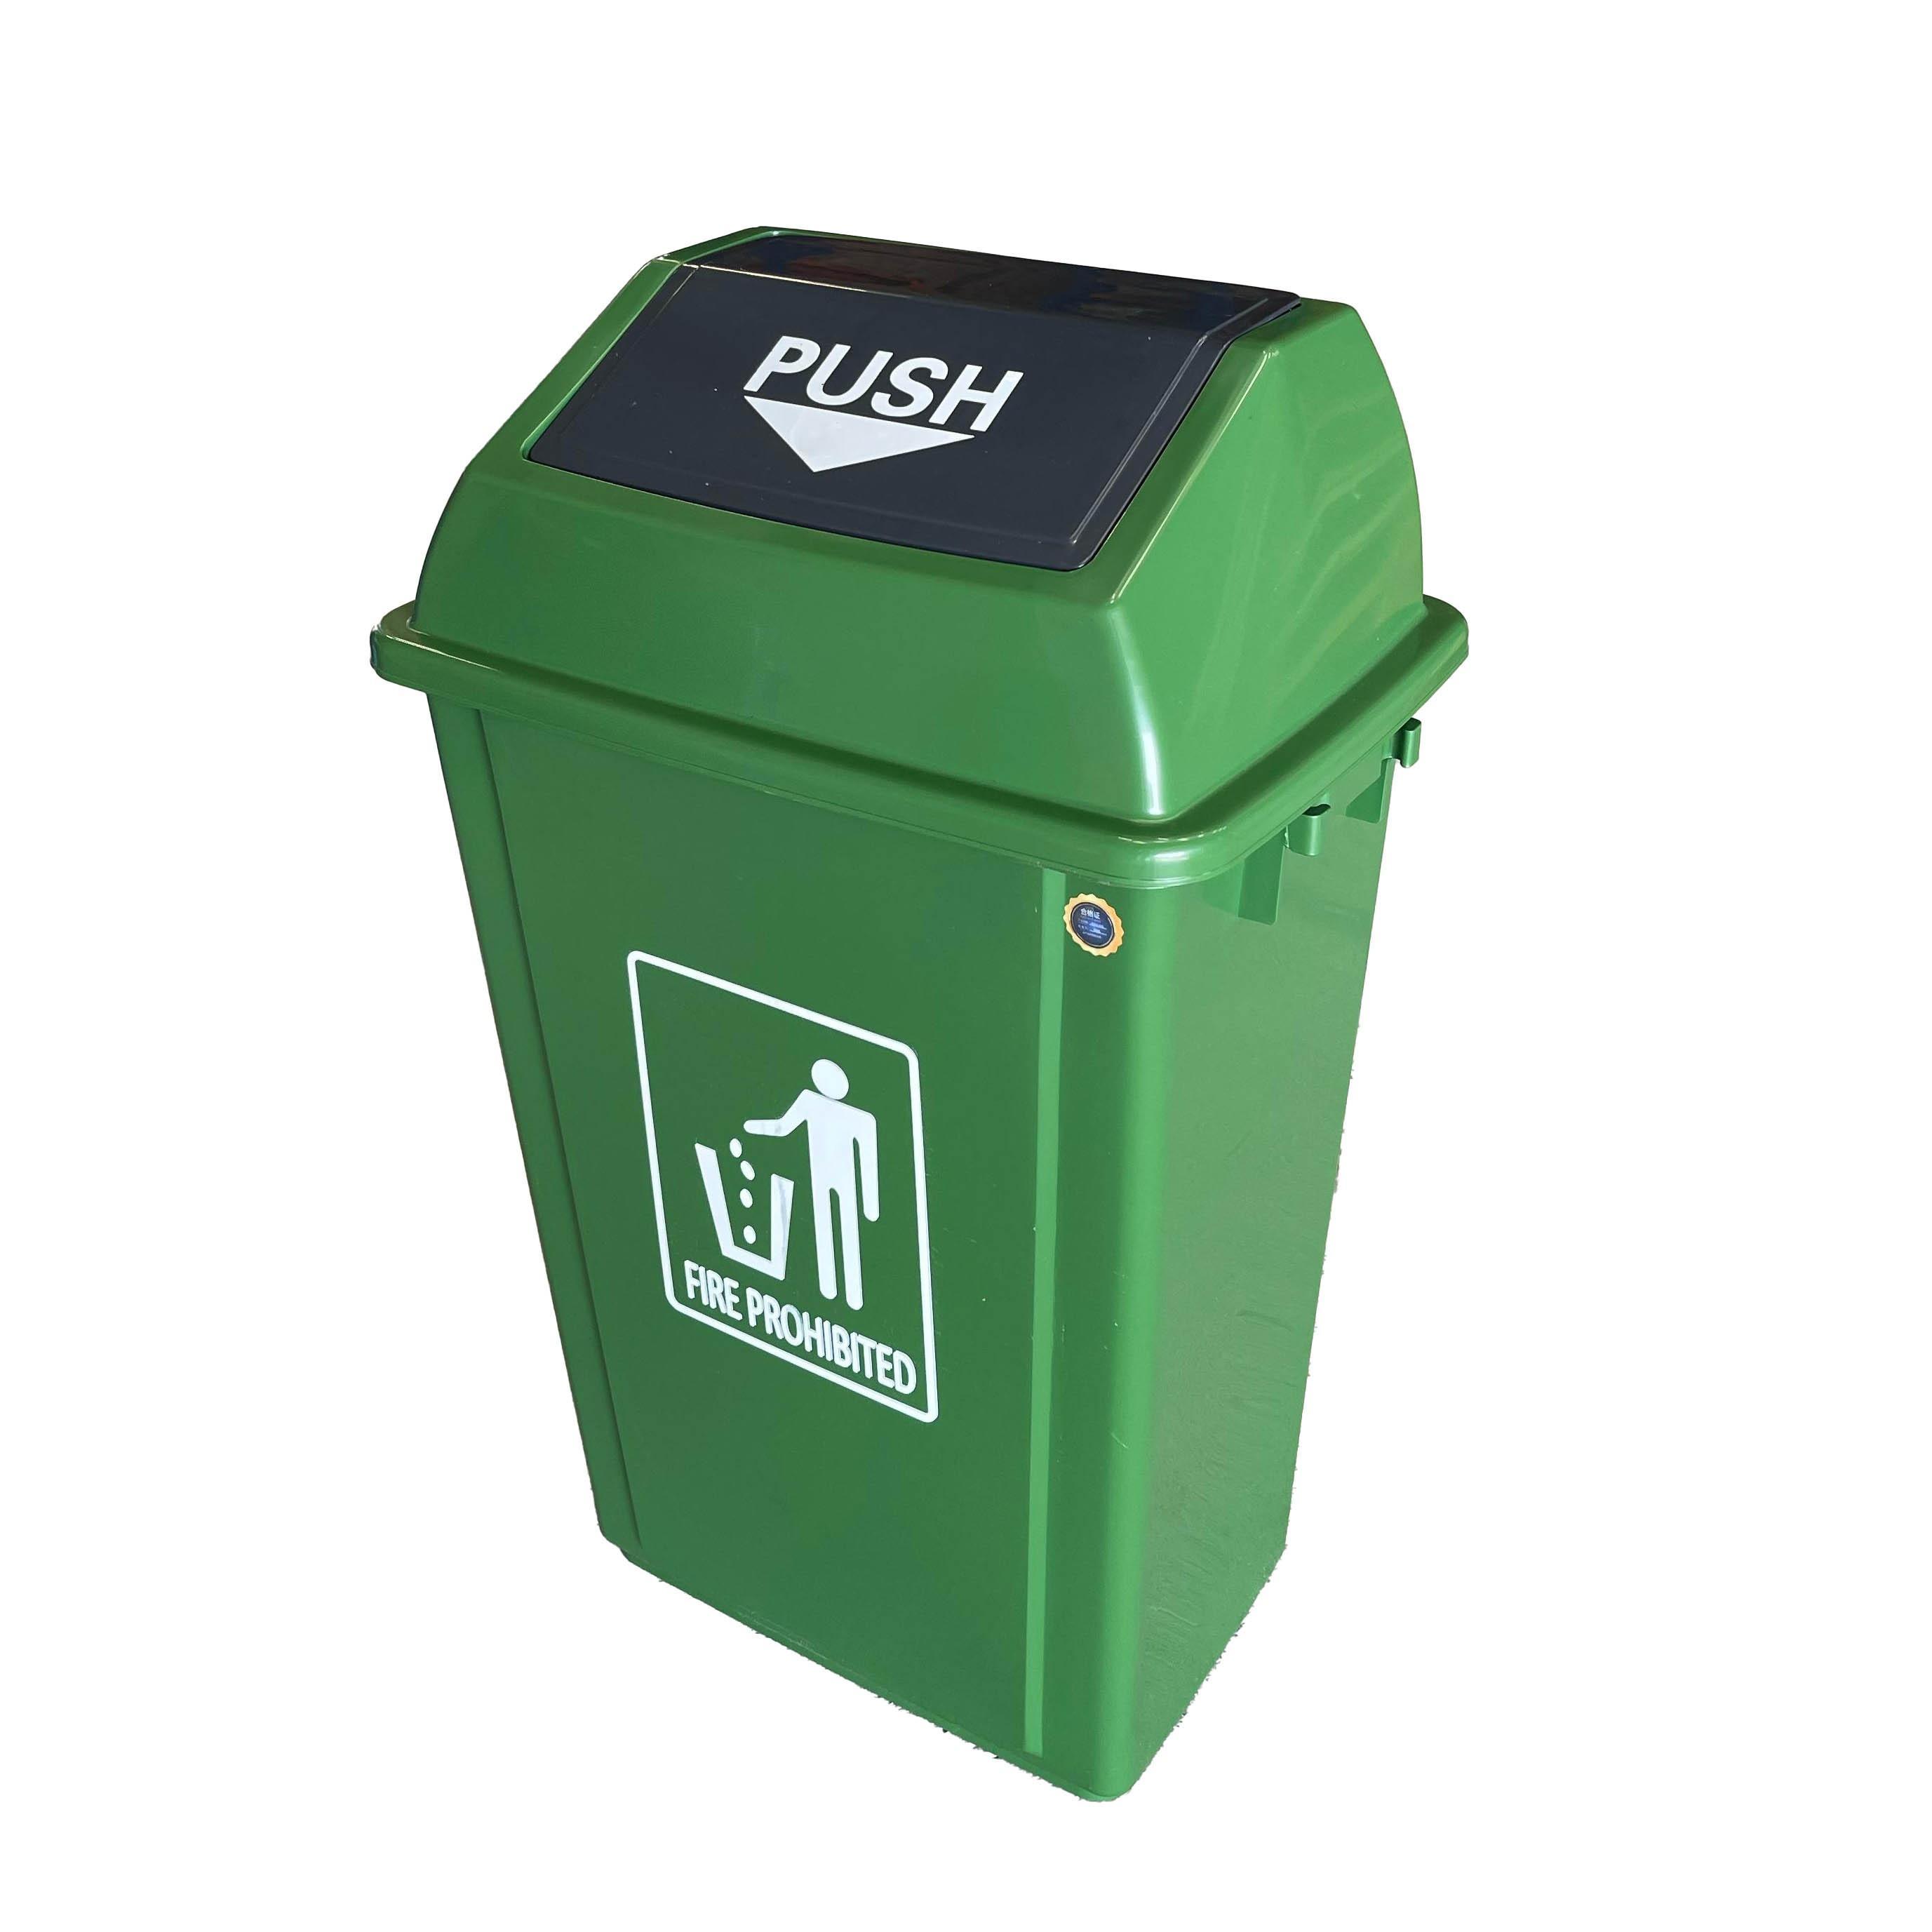 EK Quadrate Garbage Bin Green -20 Liter